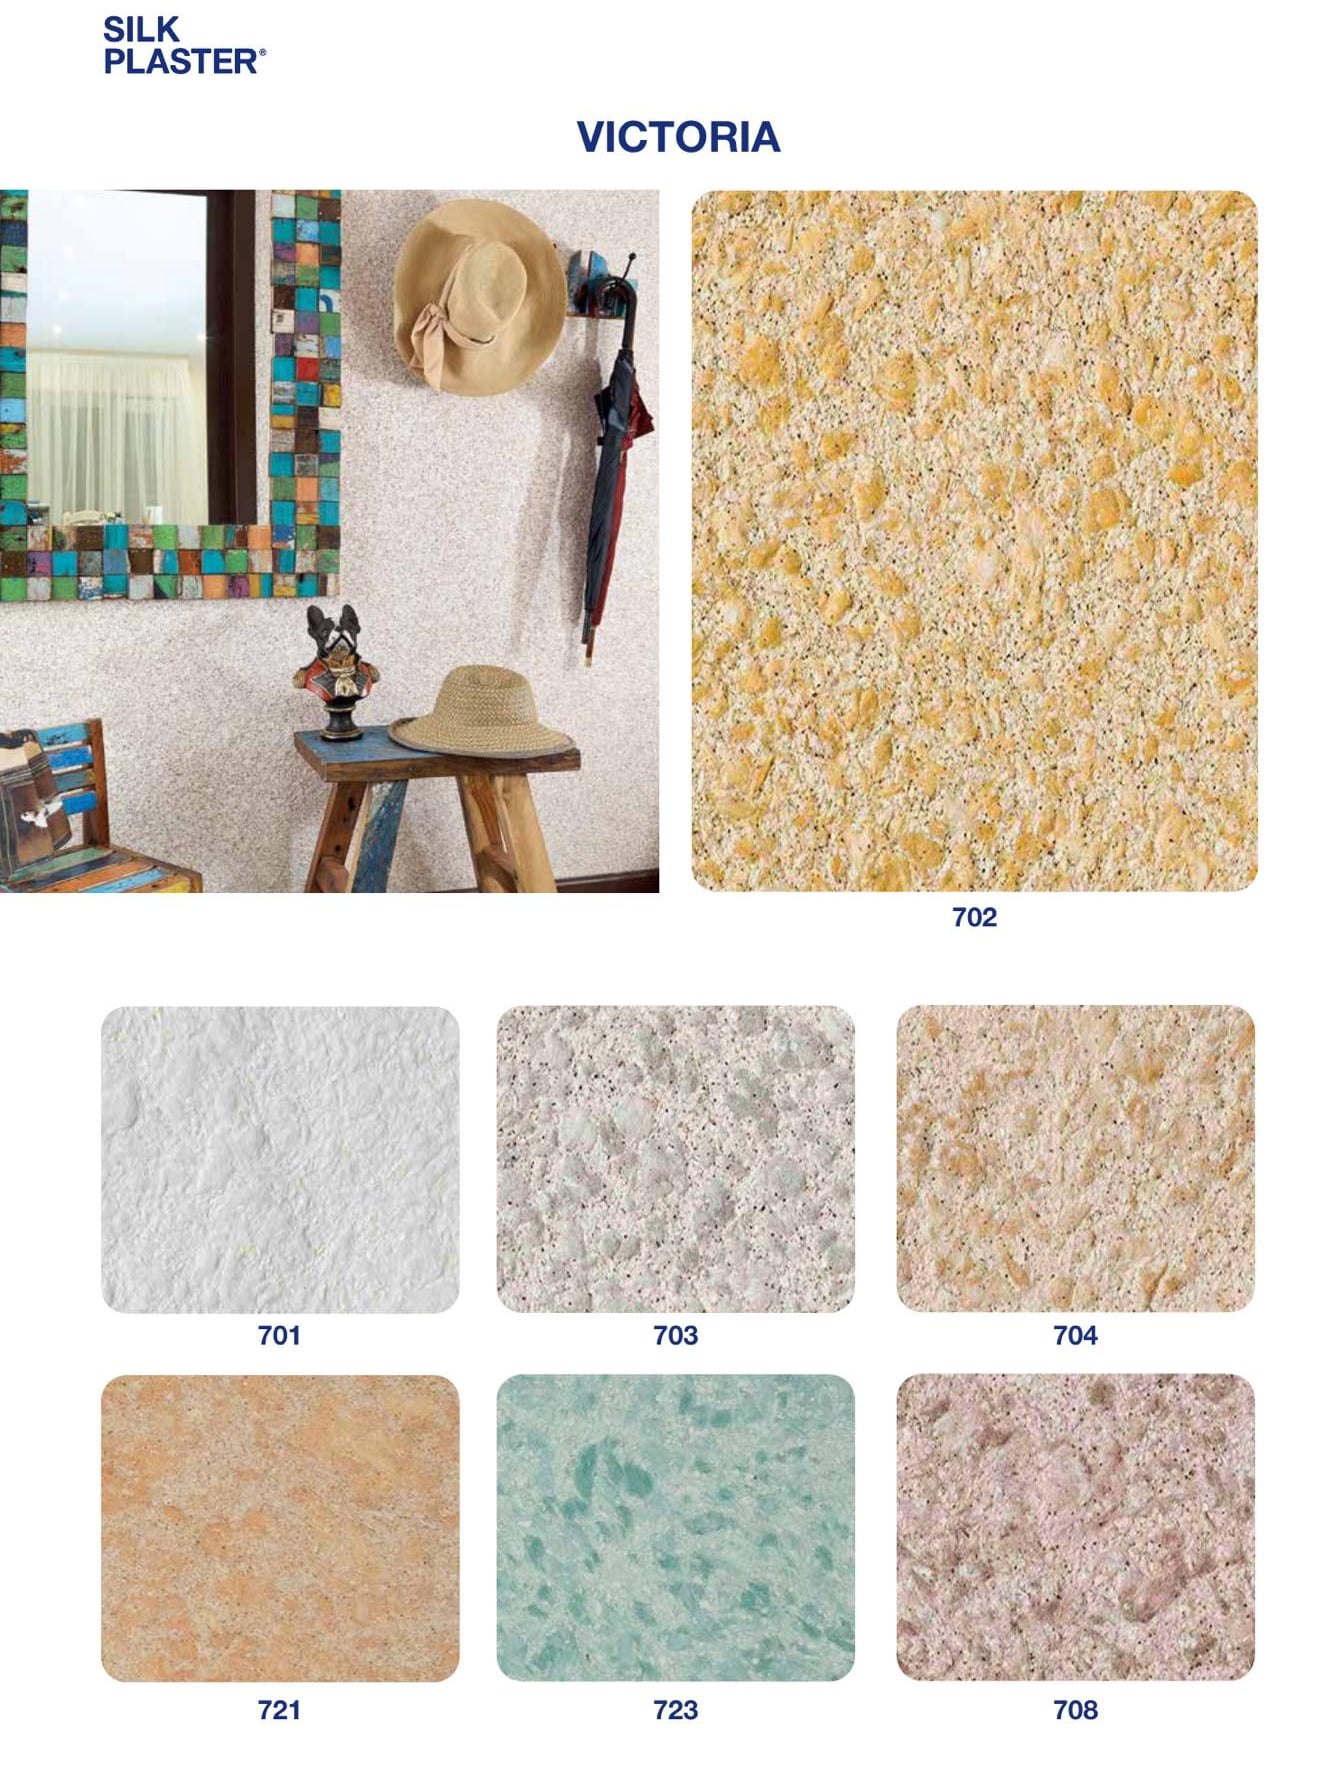 Buy Silk Plaster Victoria 701 Liquid Wallpaper Textured Surface